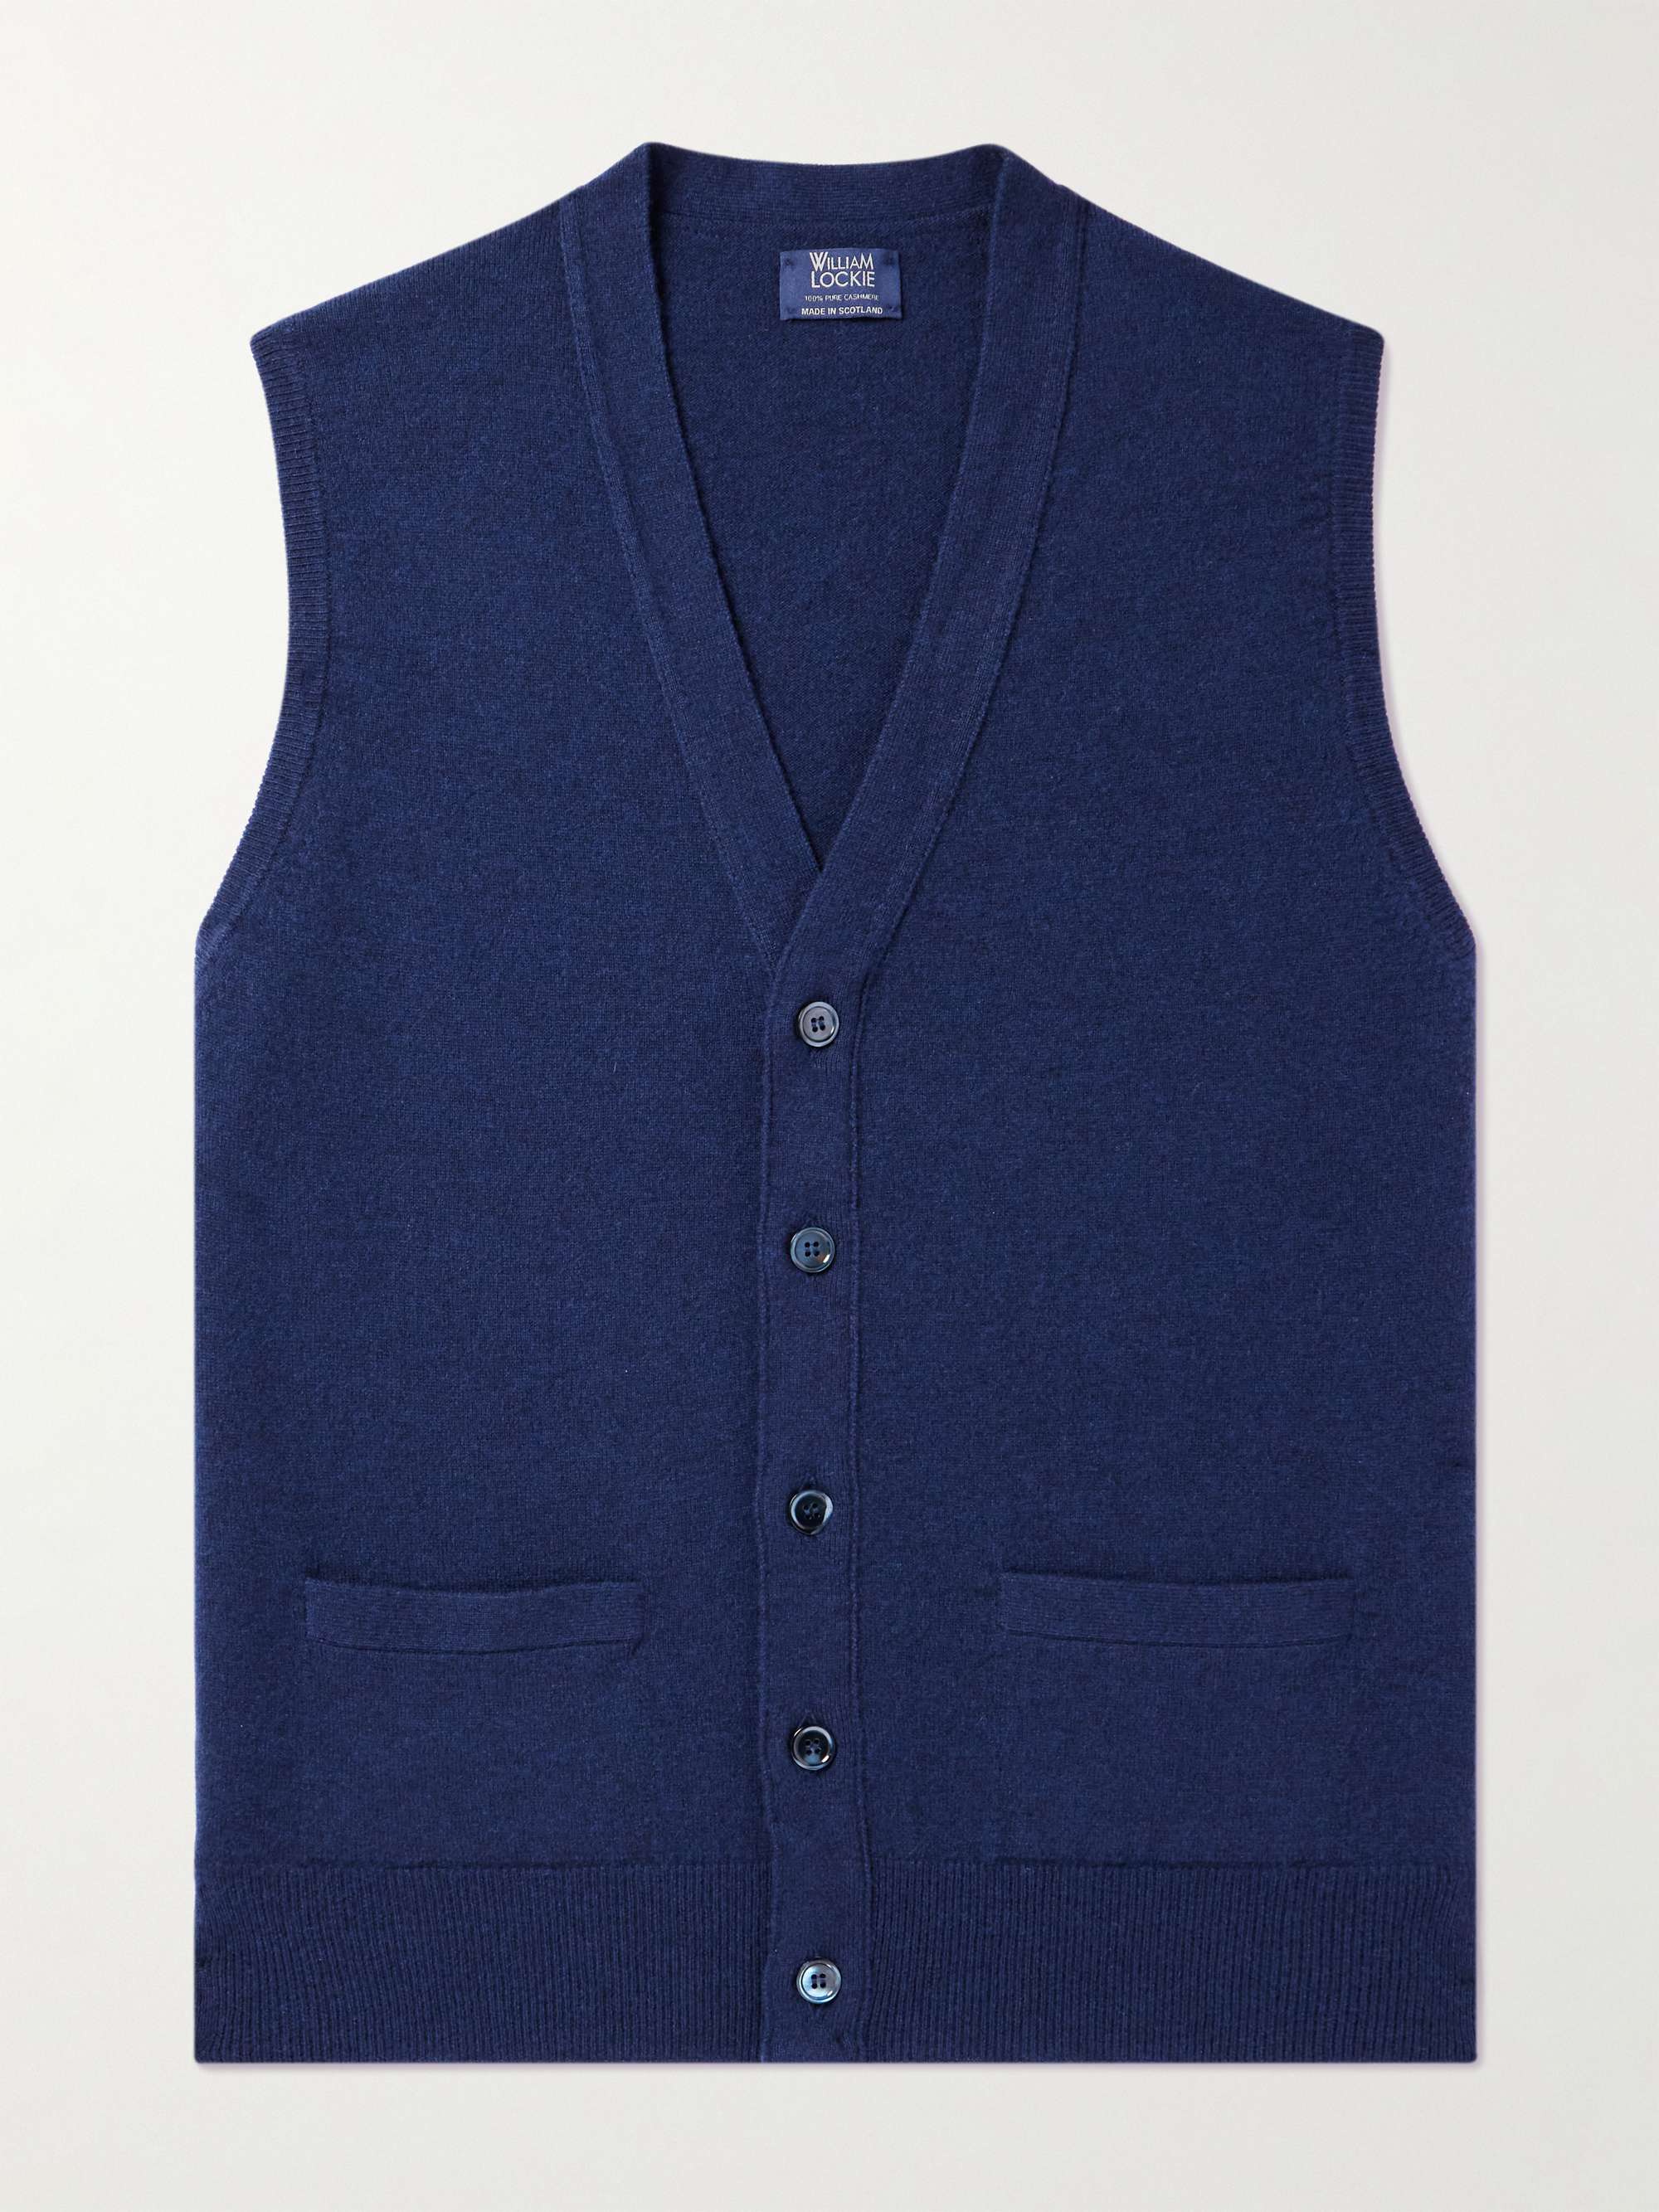 WILLIAM LOCKIE Oxton Cashmere Sweater Vest for Men | MR PORTER